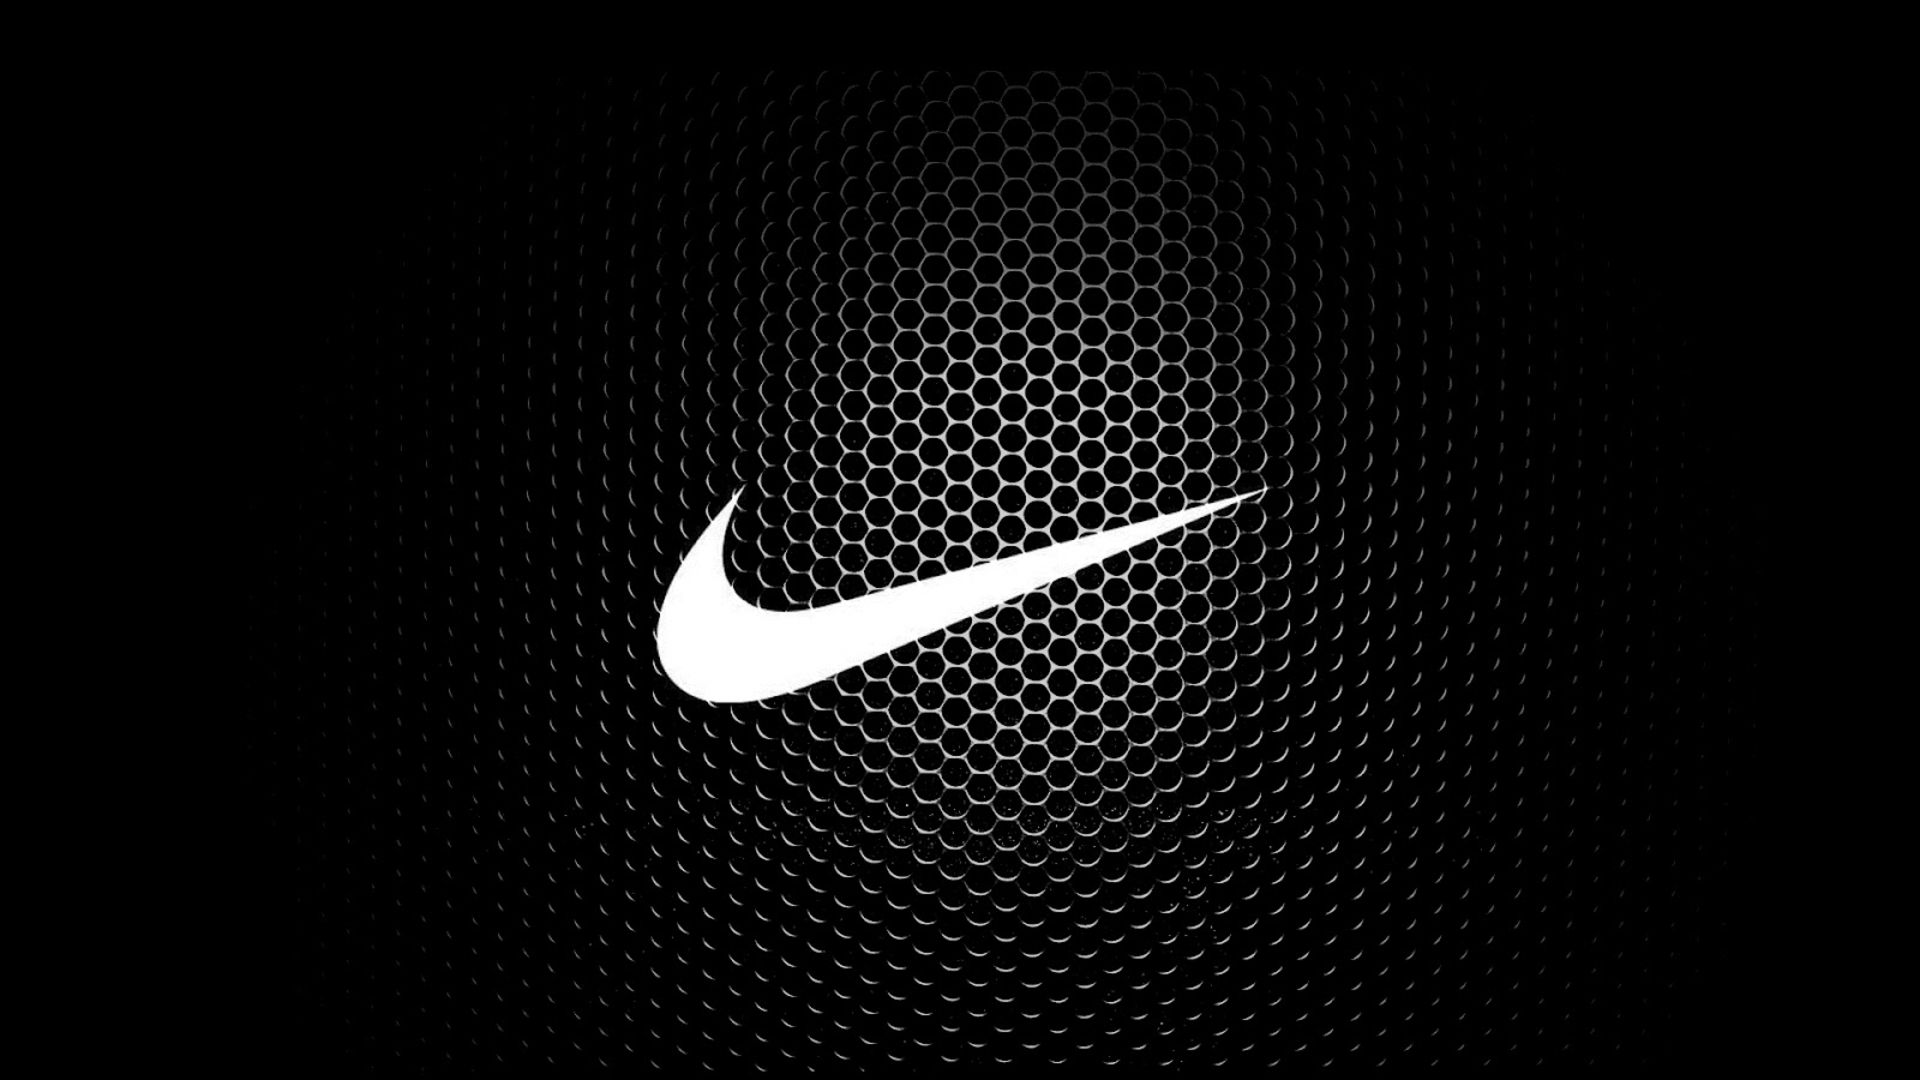  Geile Nike Hintergrundbild 1920x1080. 4K Nike Wallpaper Free 4K Nike Background